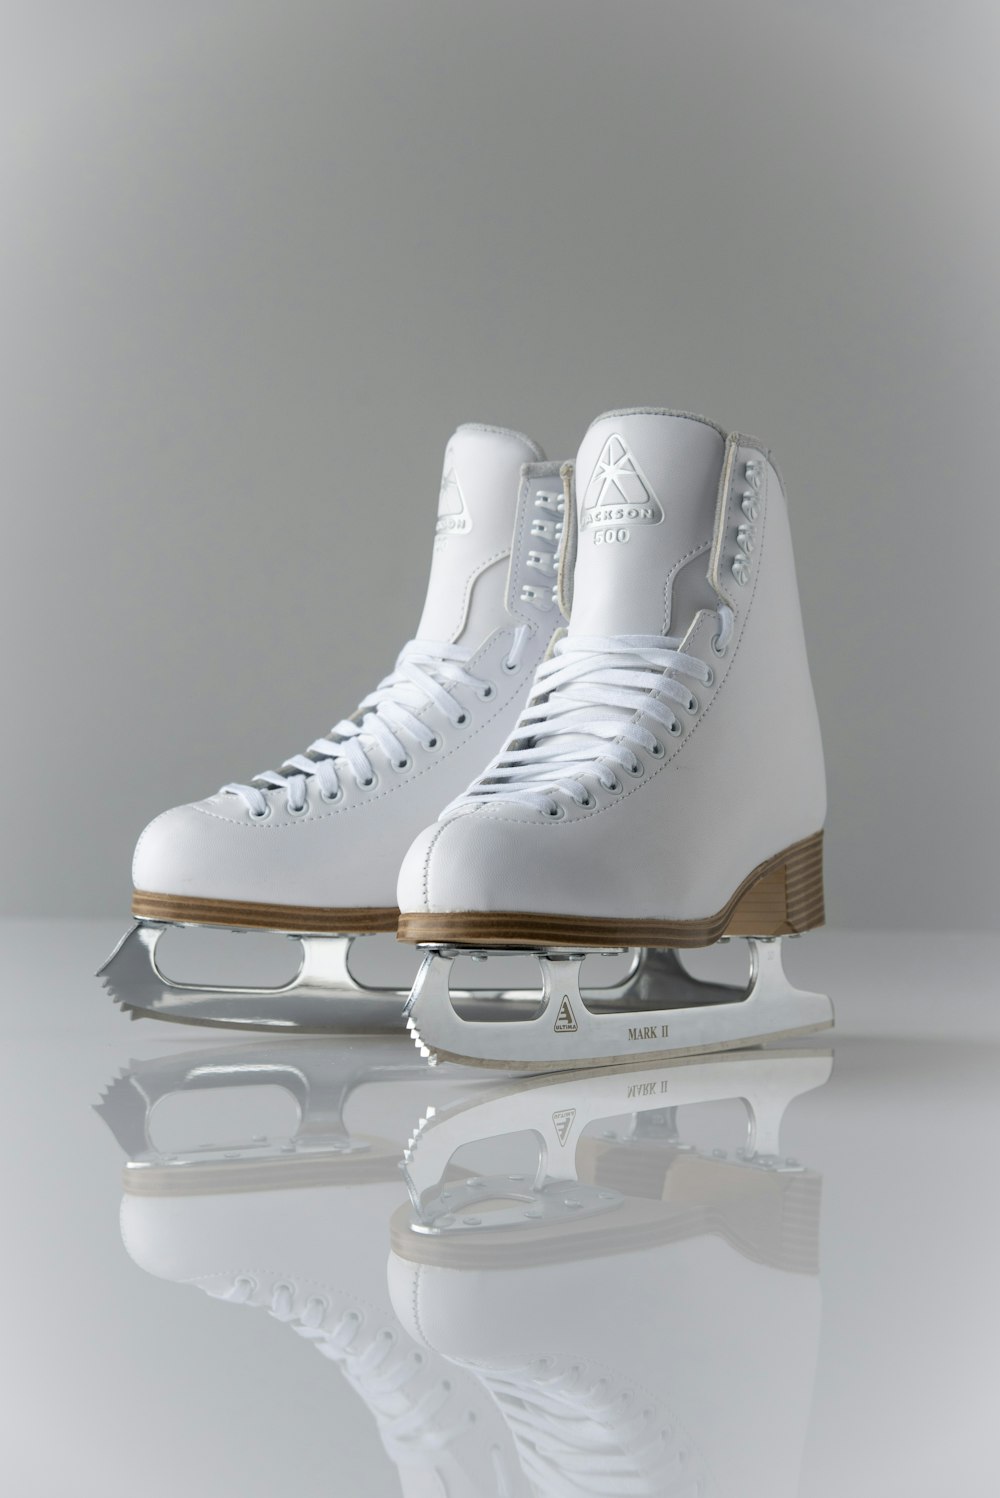 Ice Skates Pictures | Download Free Images on Unsplash